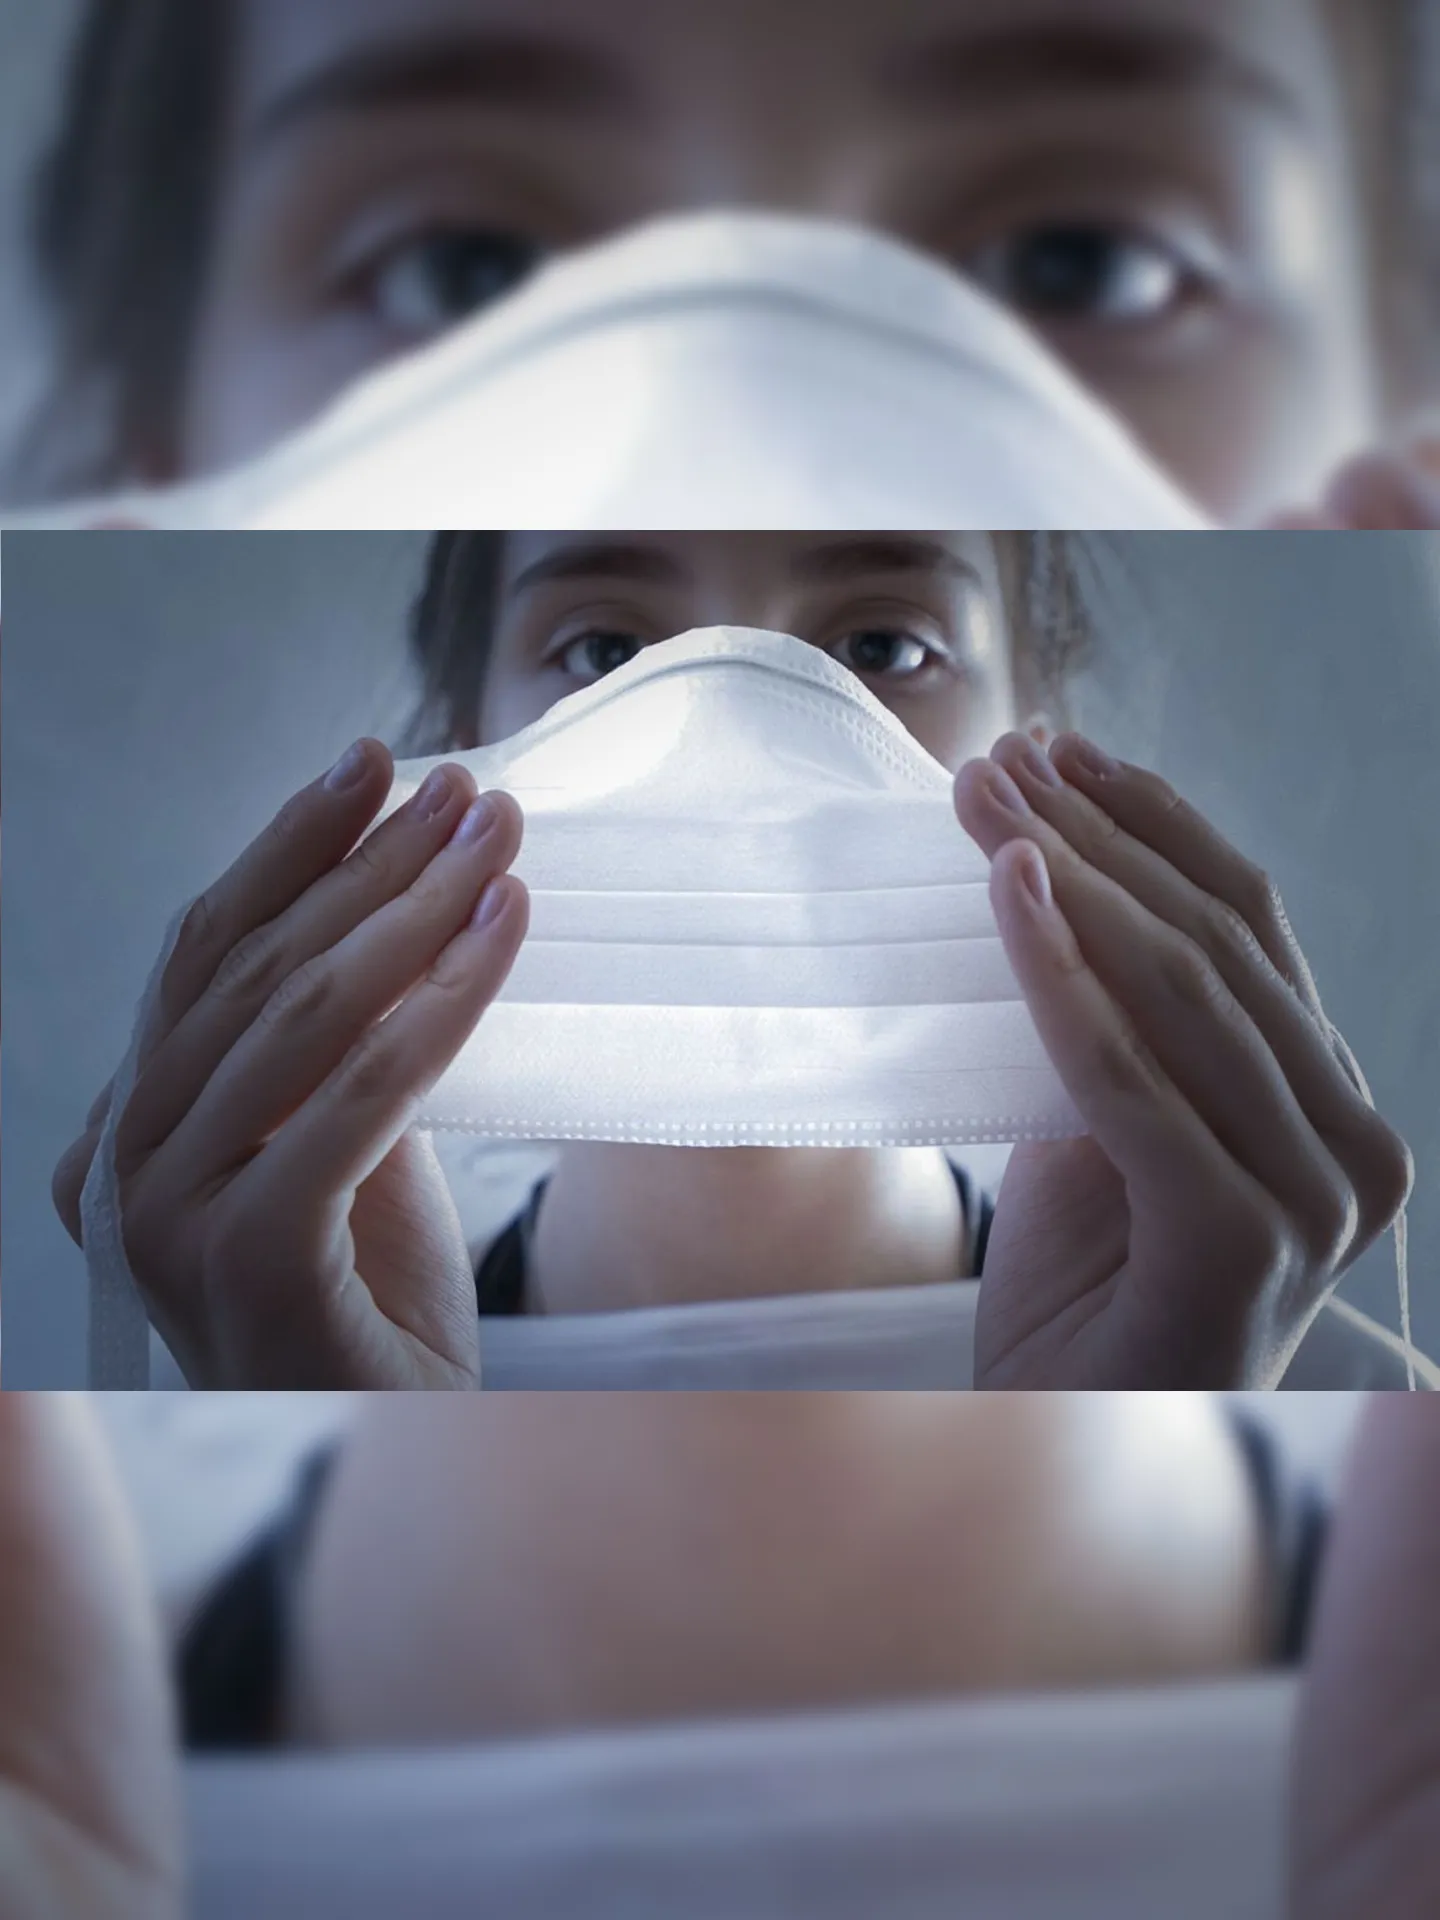 Uso de máscara para proteção contra o novo coronavírus.